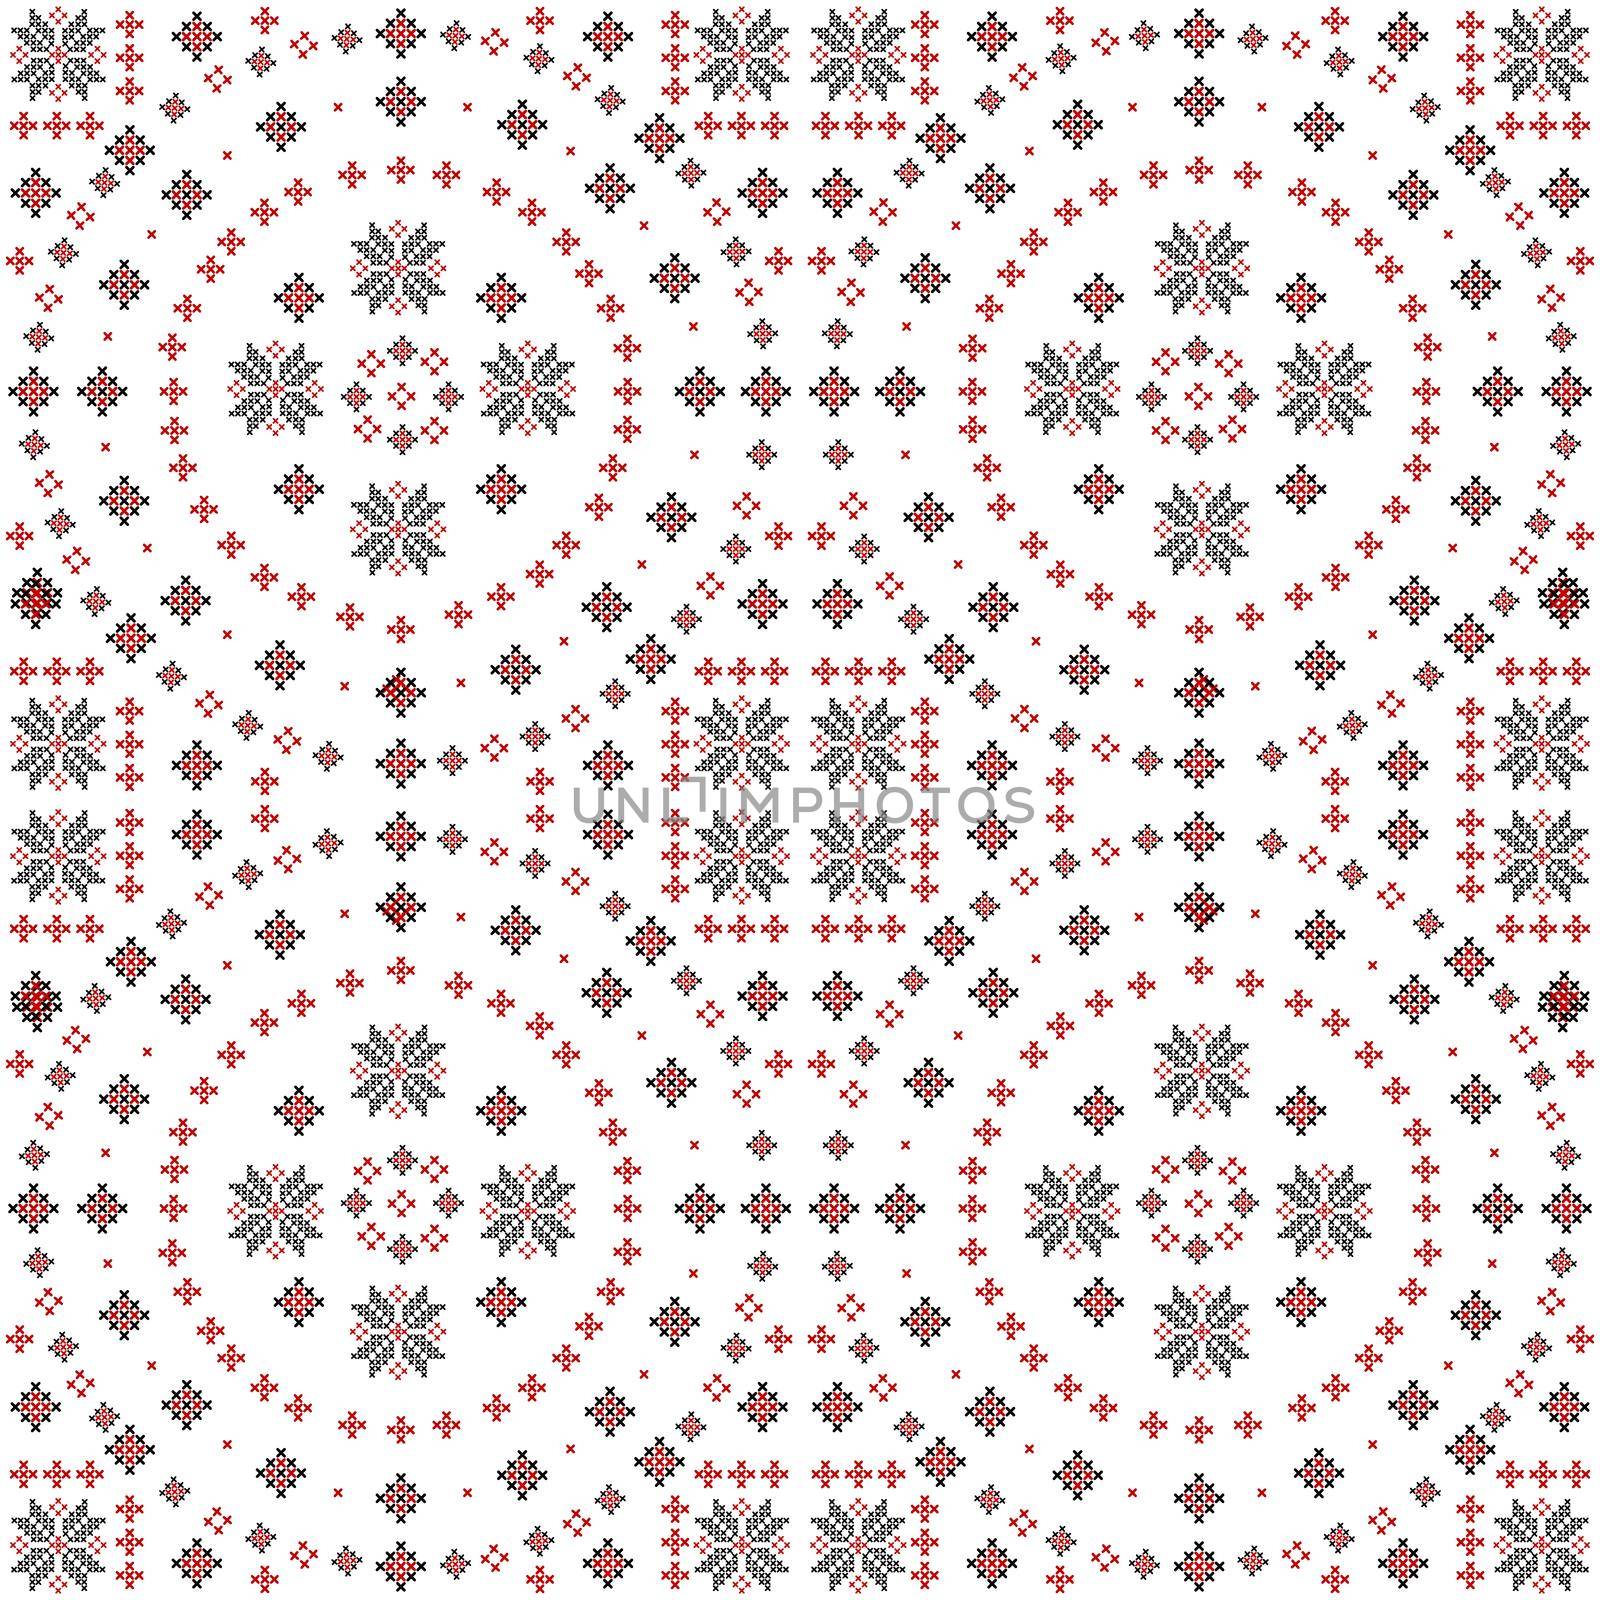 Embroidered cross-stitch round seamless pattern by hibrida13